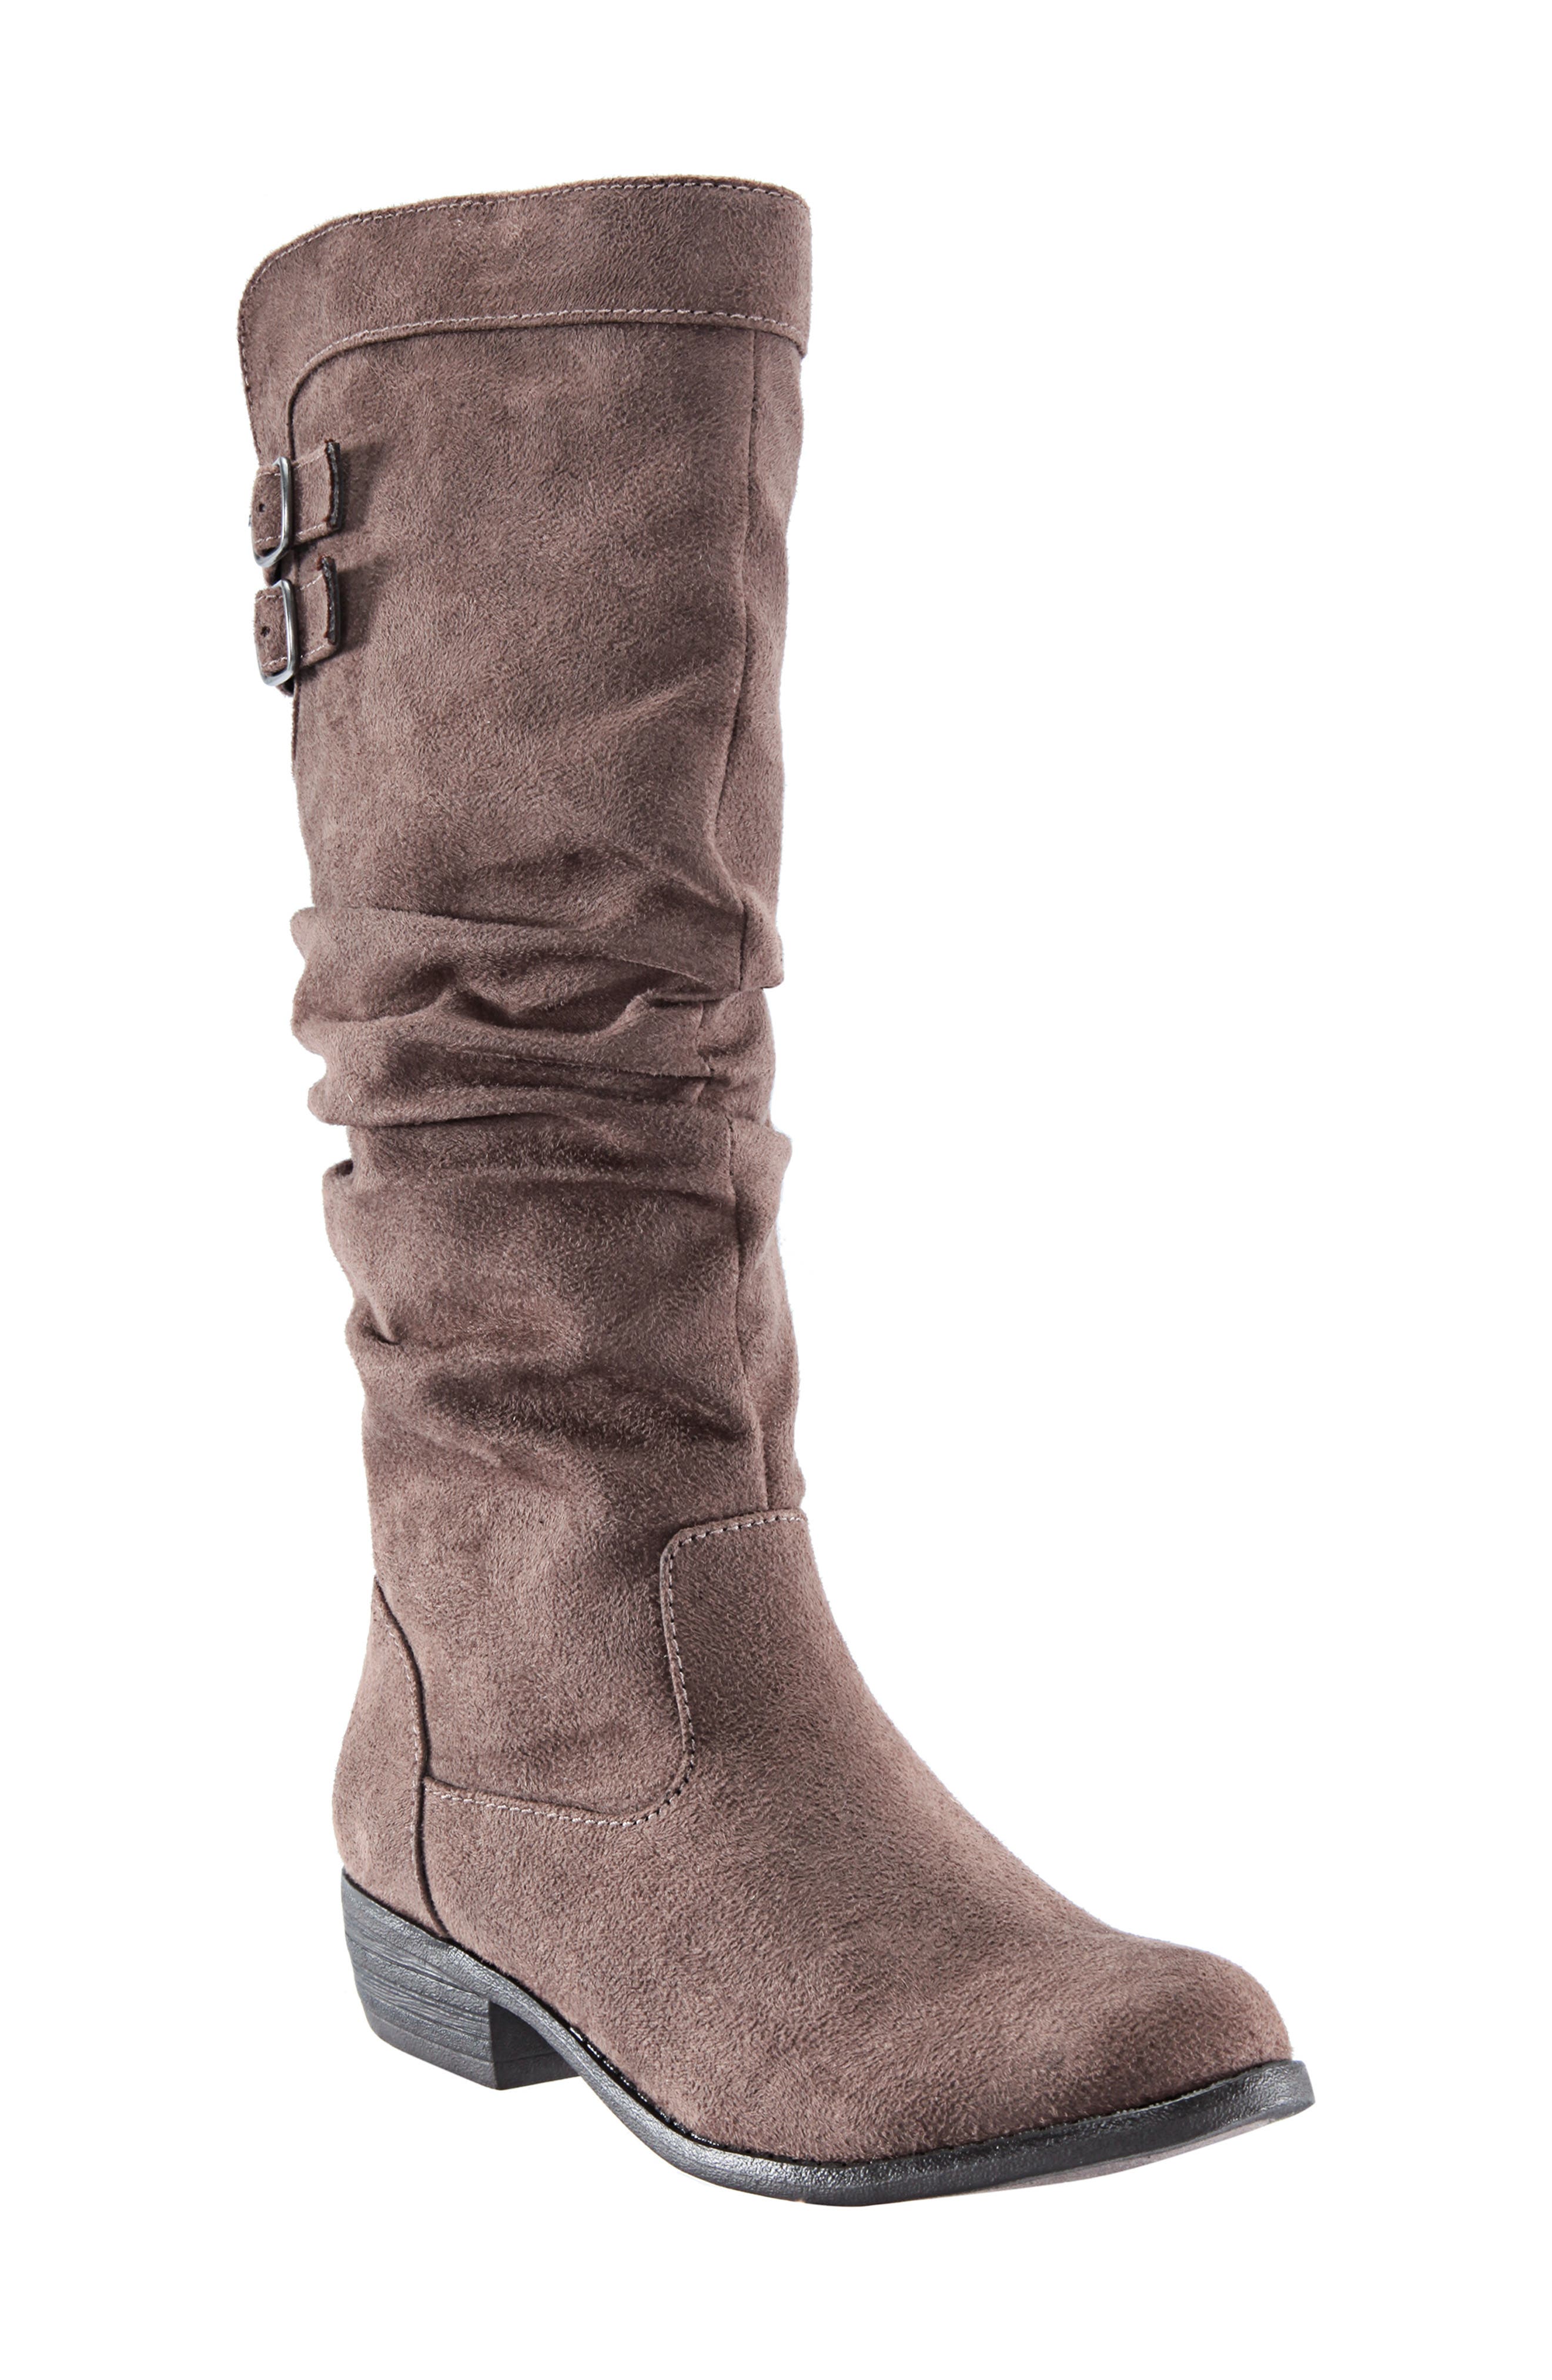 UPC 794378361633 product image for Girl's Nina Gilda Tall Slouchy Boot, Size 13 M - Beige | upcitemdb.com